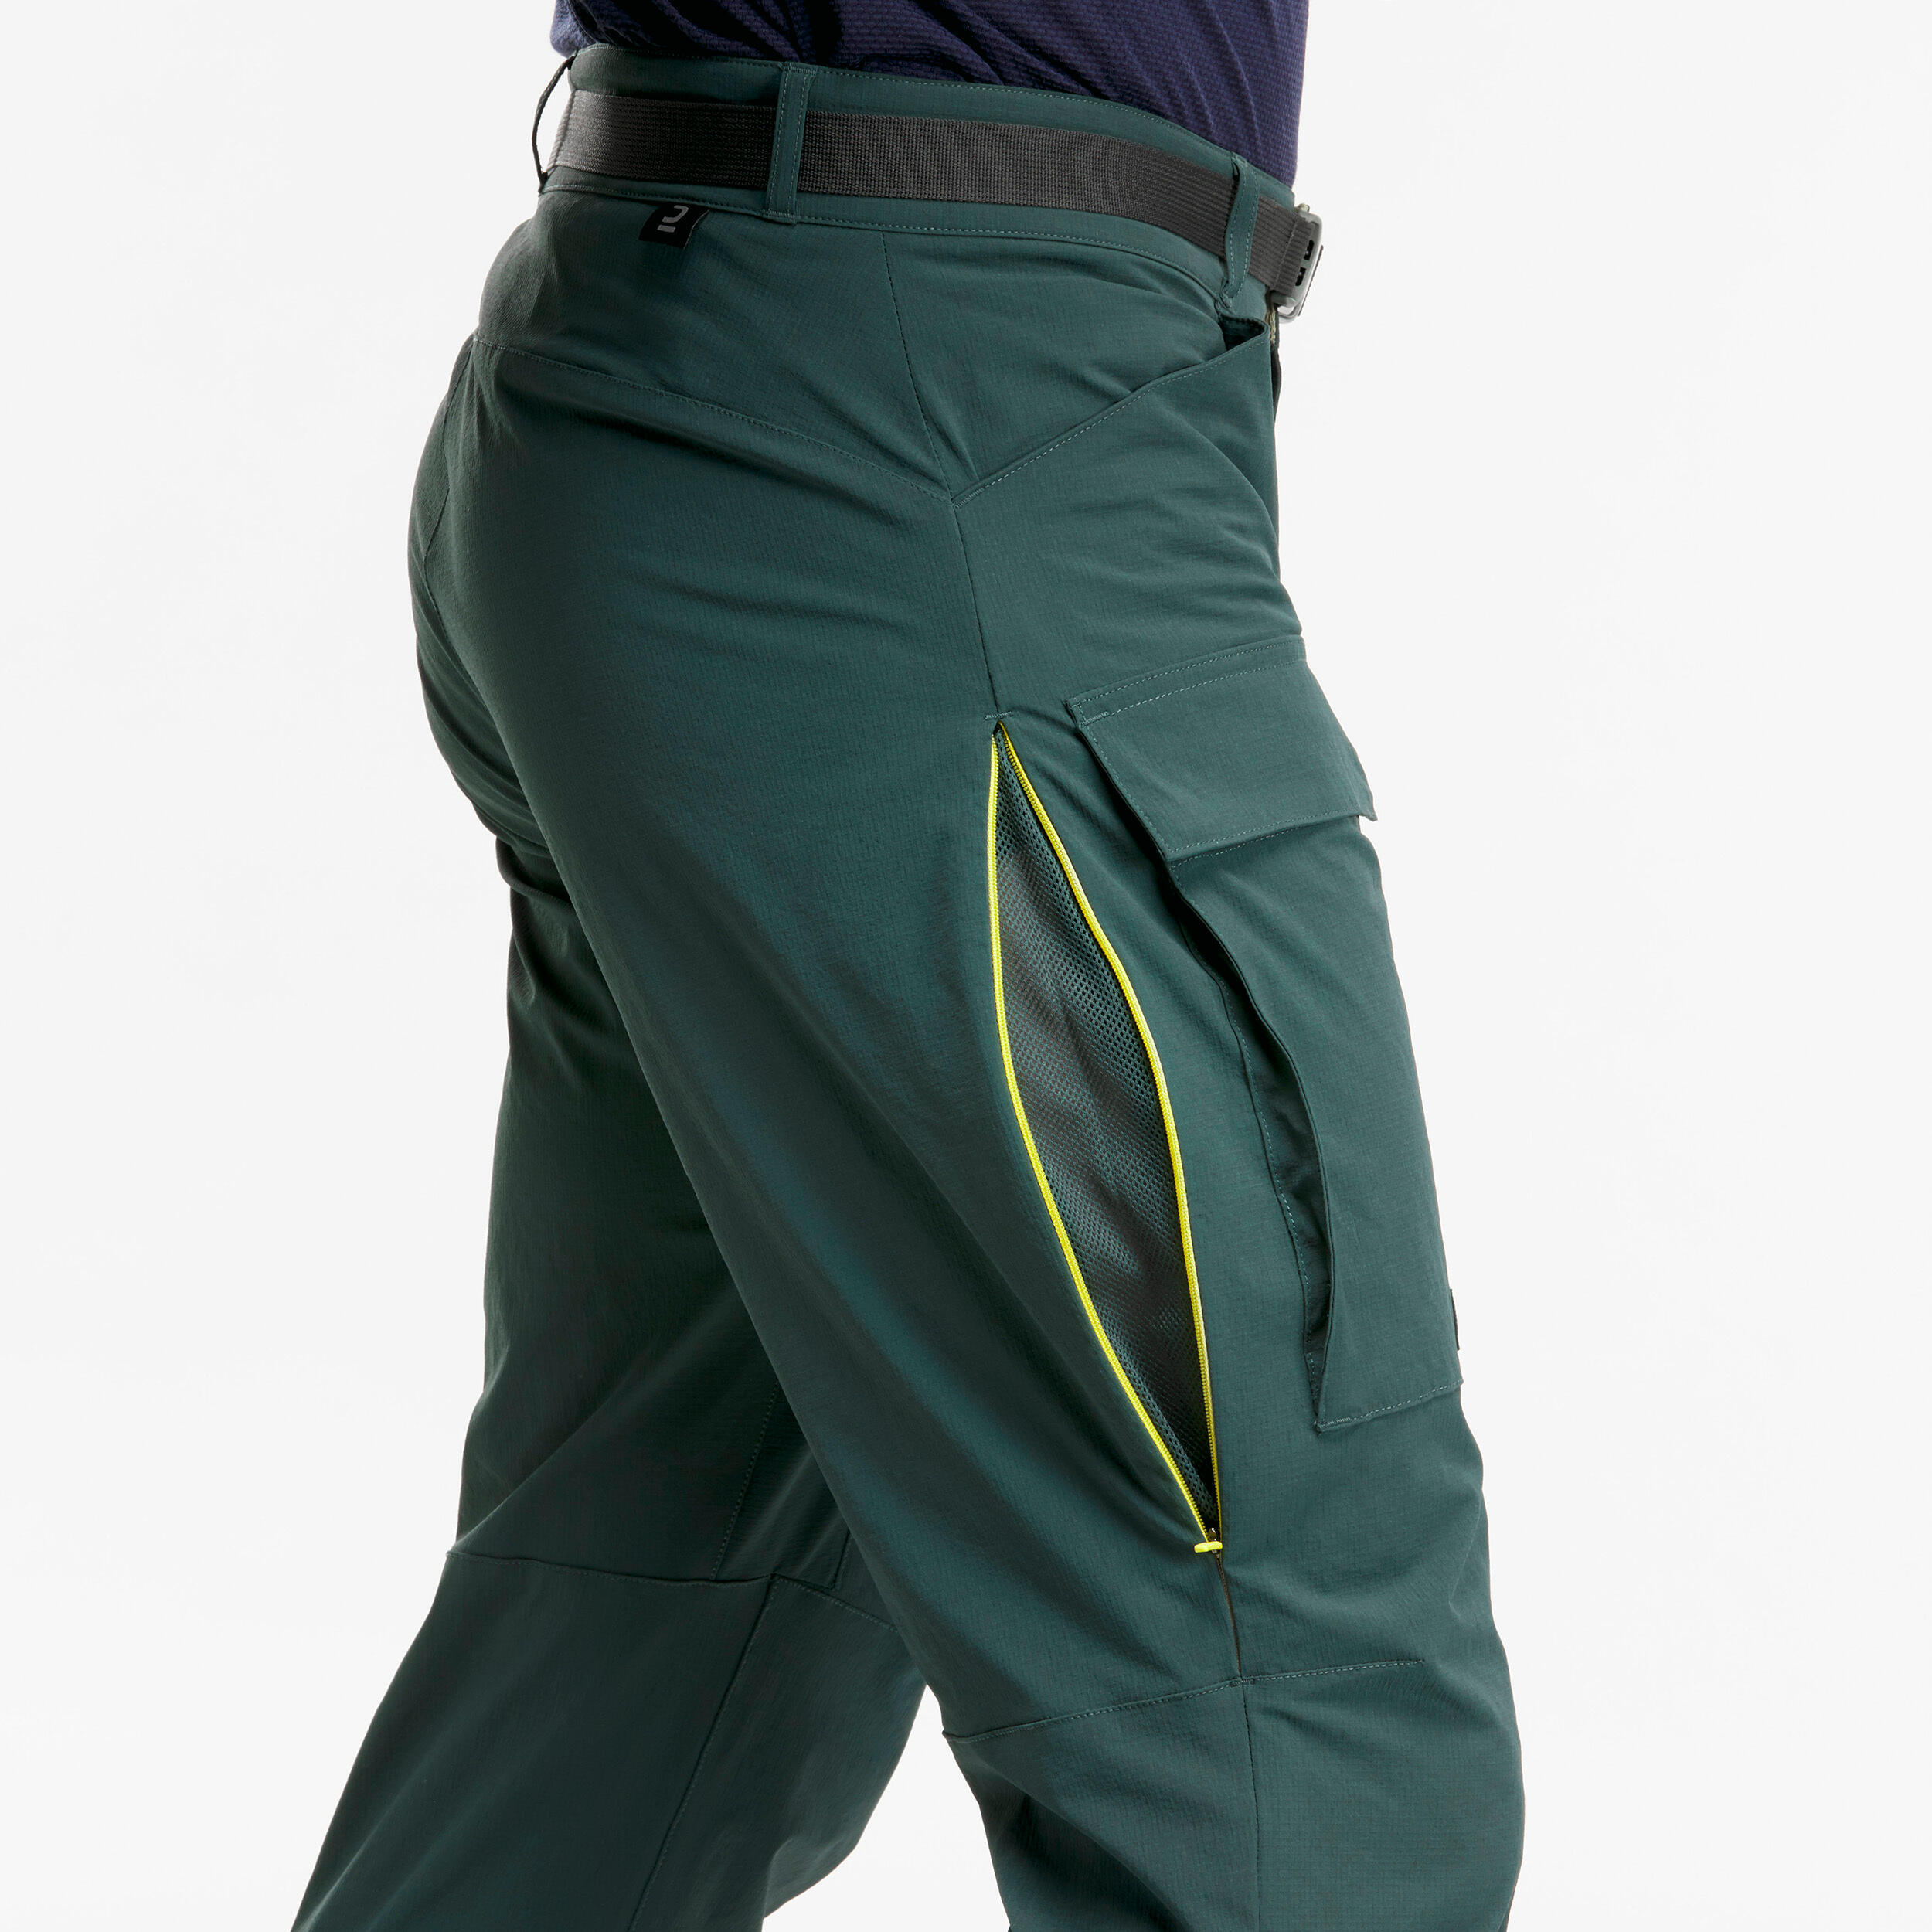 Men's Anti-mosquito Trousers - Tropic 900 - green 6/11